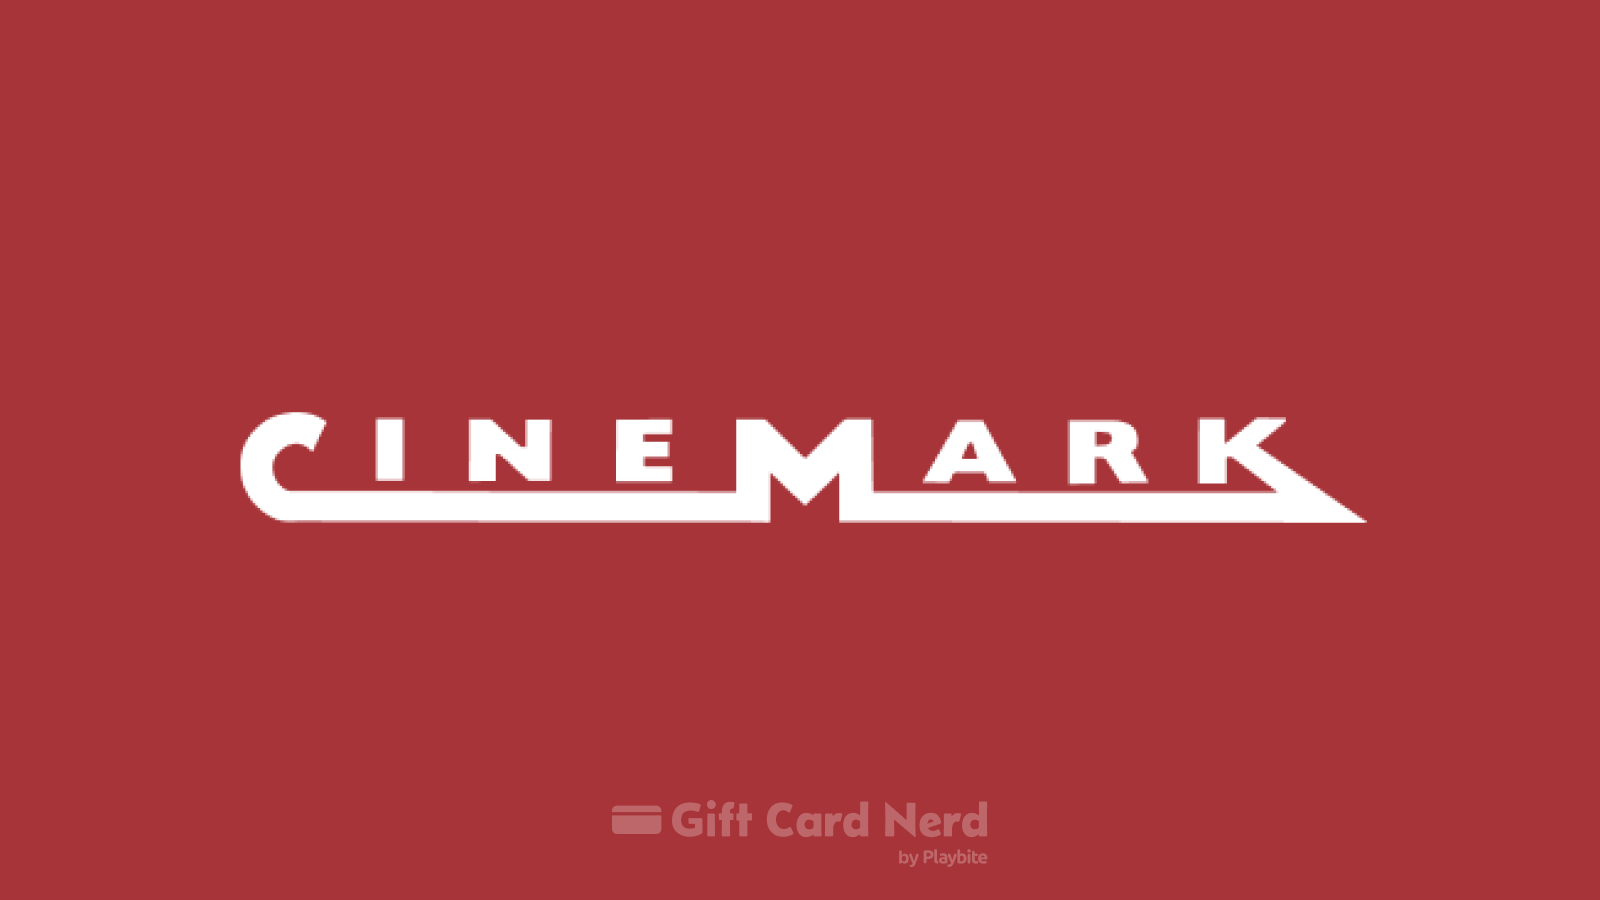 Can I Use a Cinemark Gift Card on Cash App?